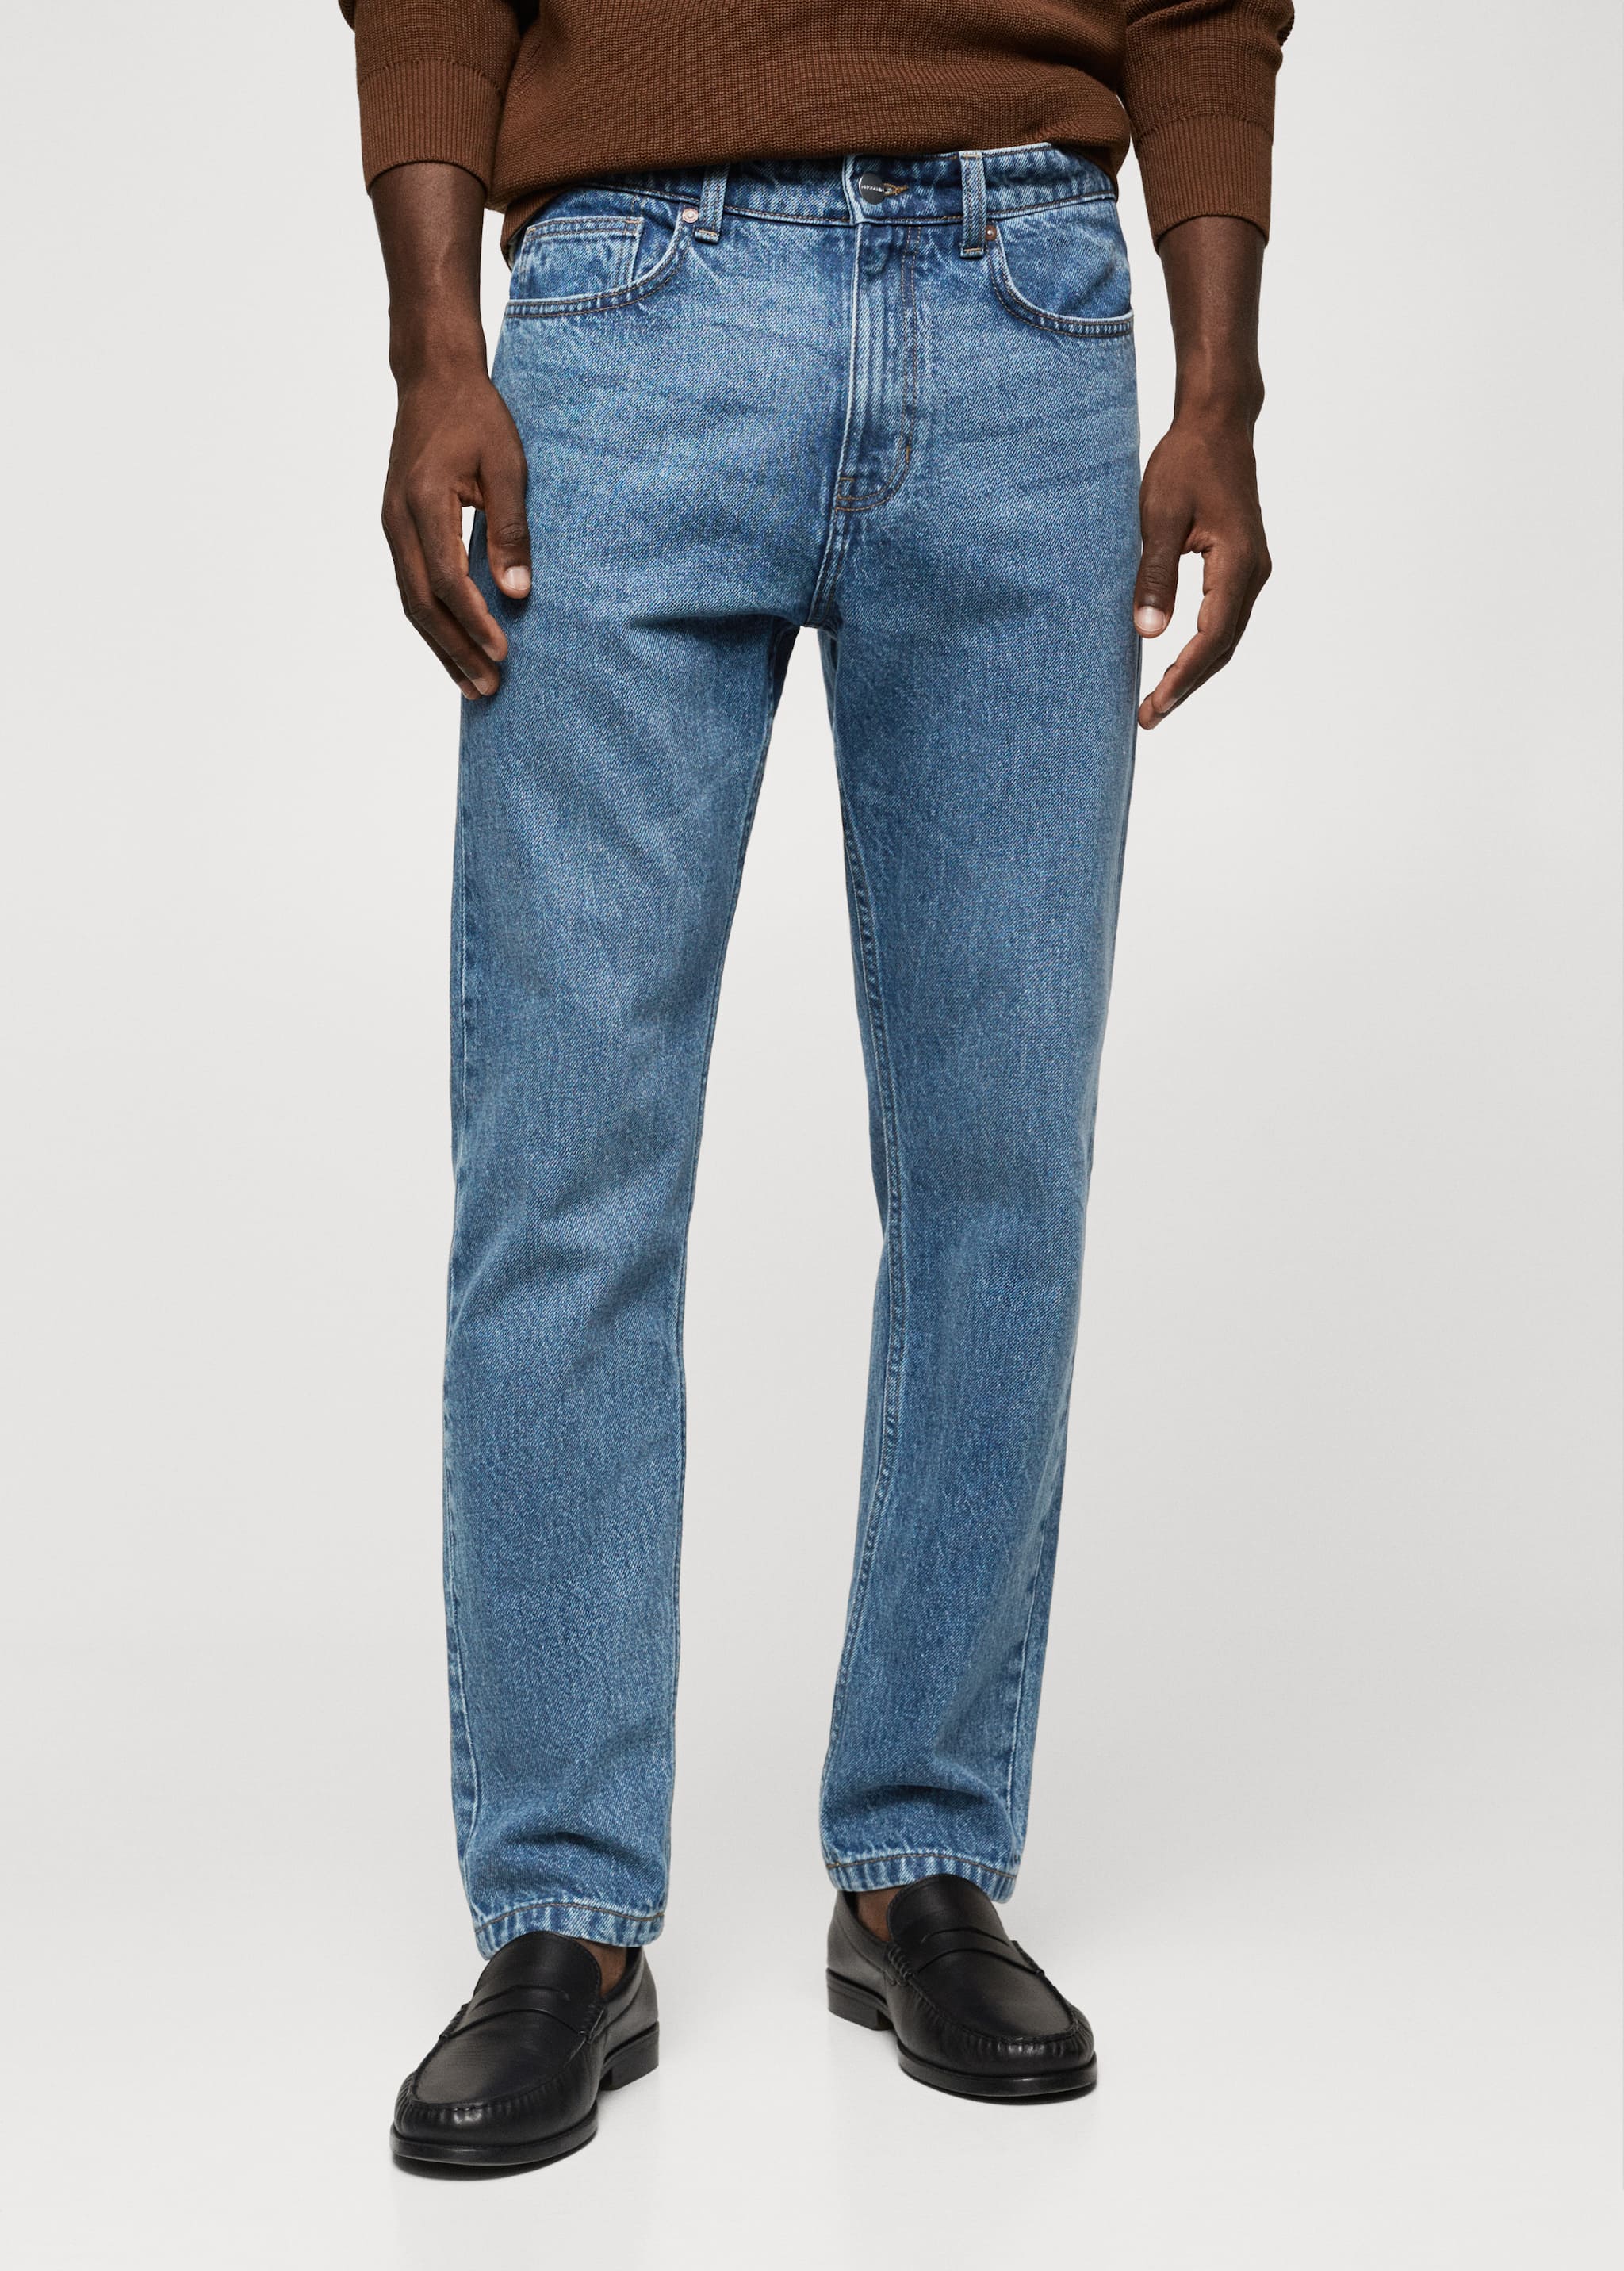 Jeans Bob straight-fit - Bild av mittparti